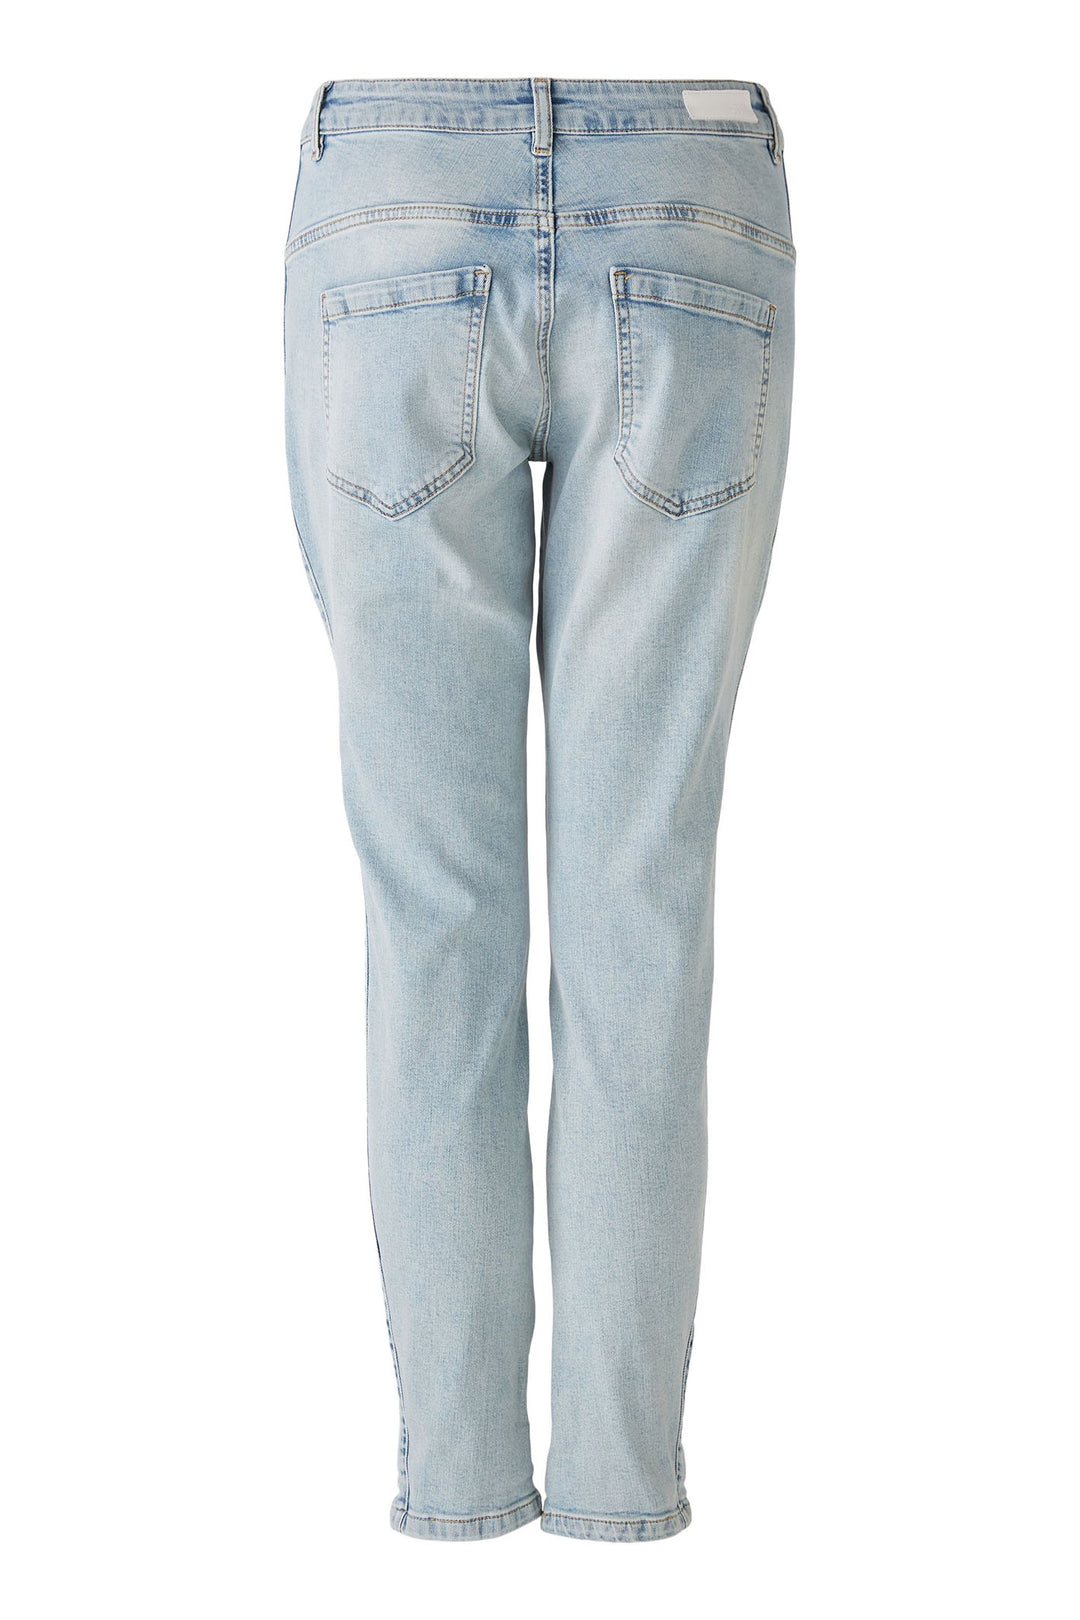 Oui 86805 Blue Denim Pre Fade Jeans - Olivia Grace Fashion